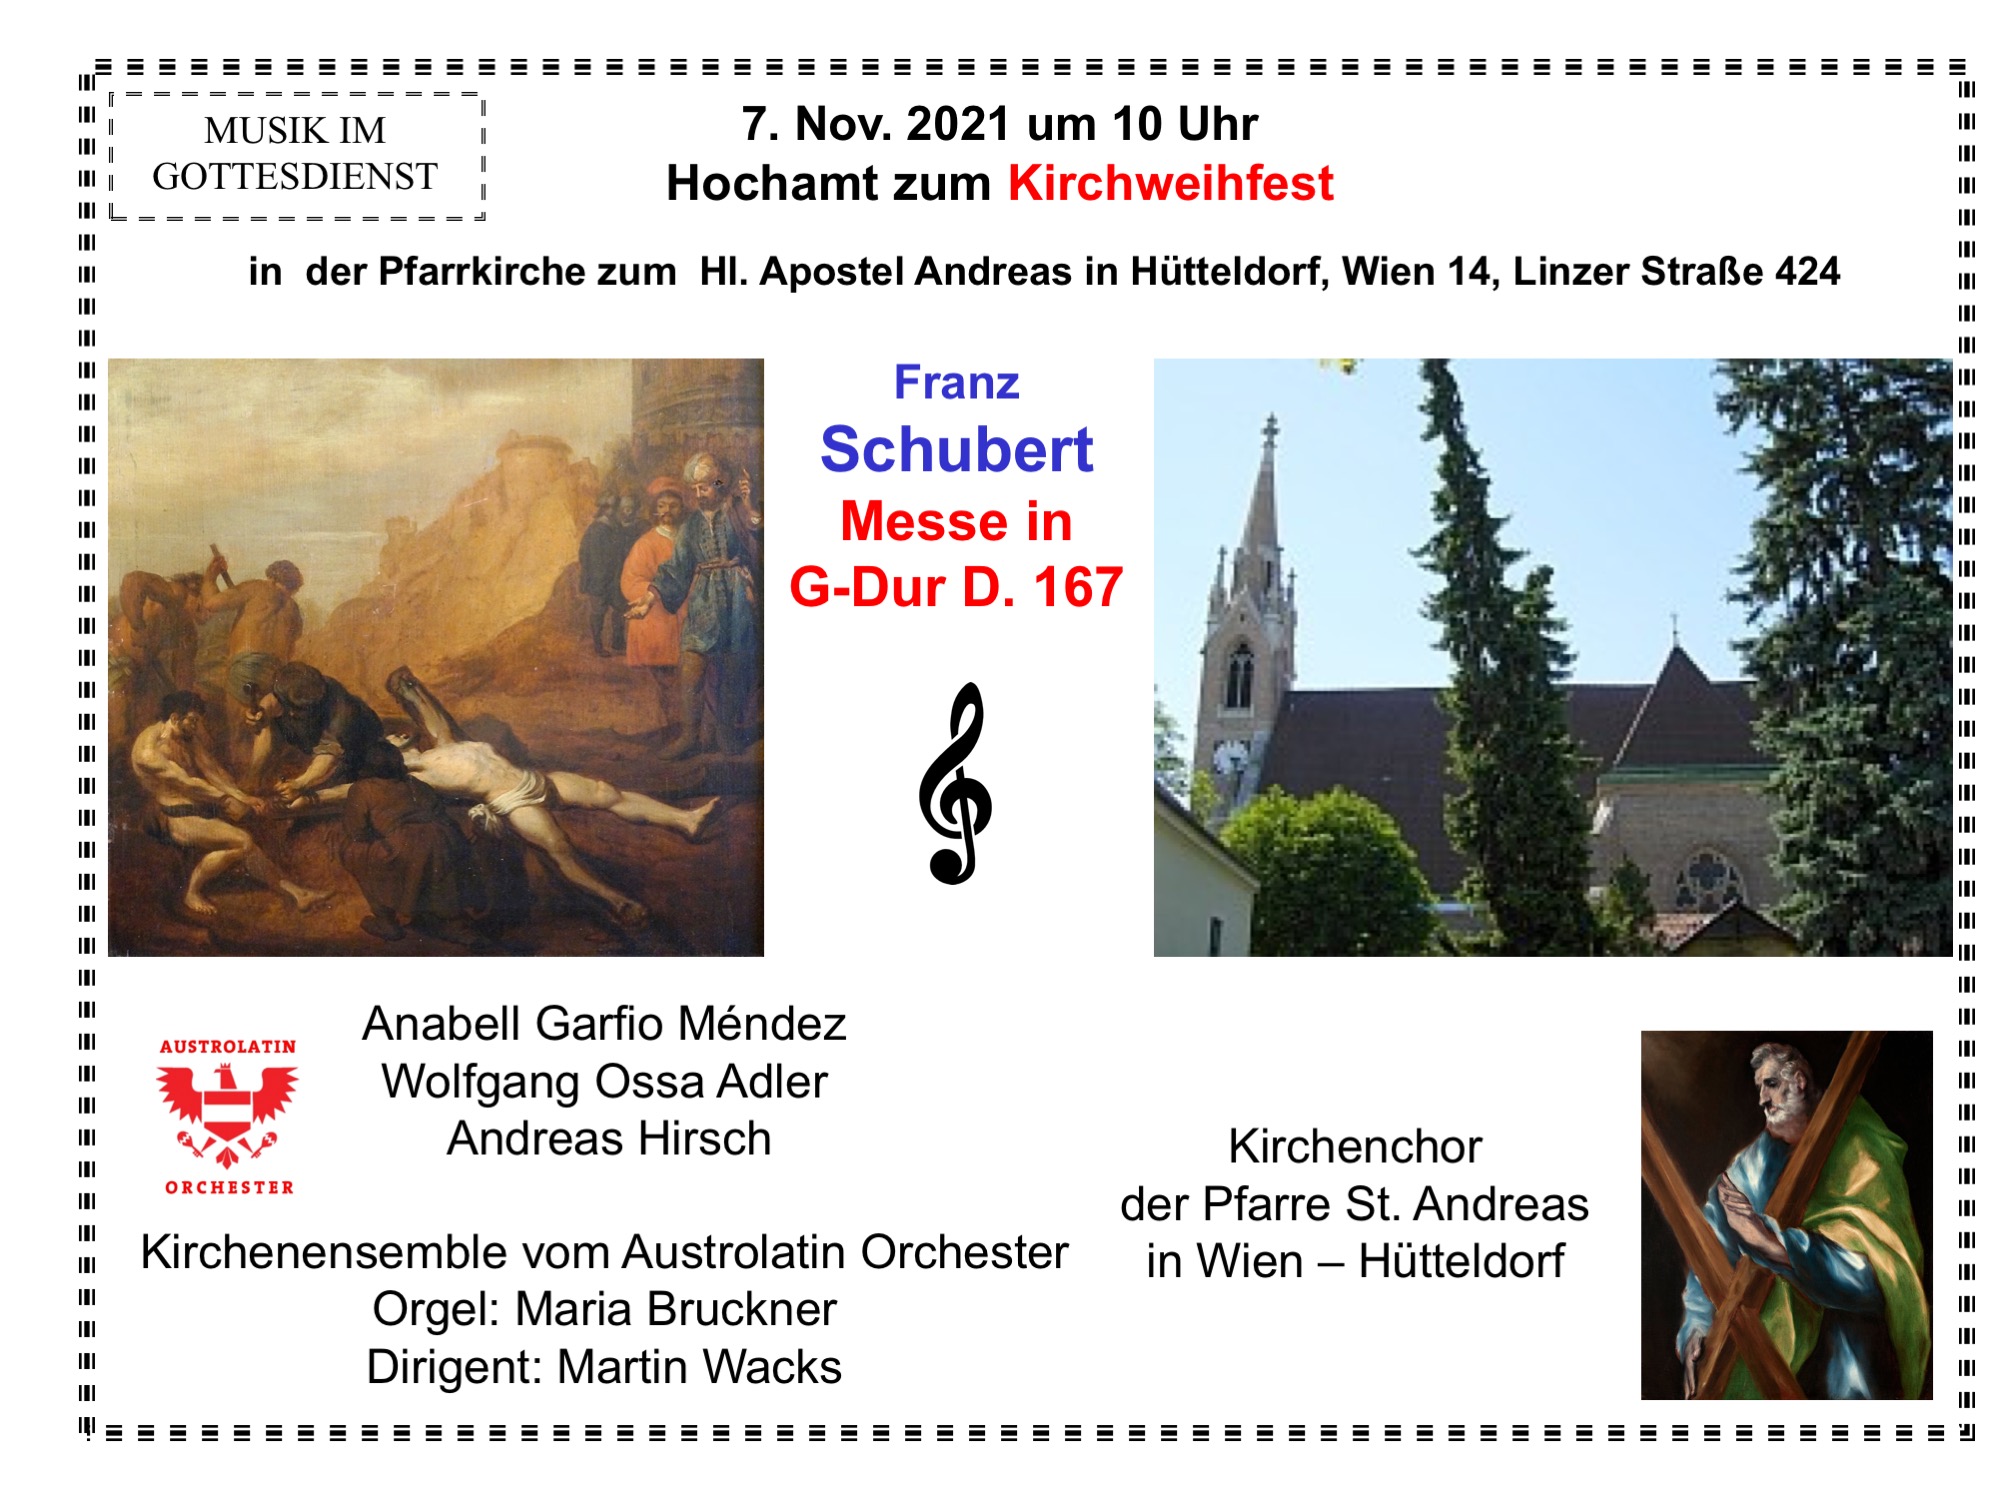 Schubert: Messe in G-Dur